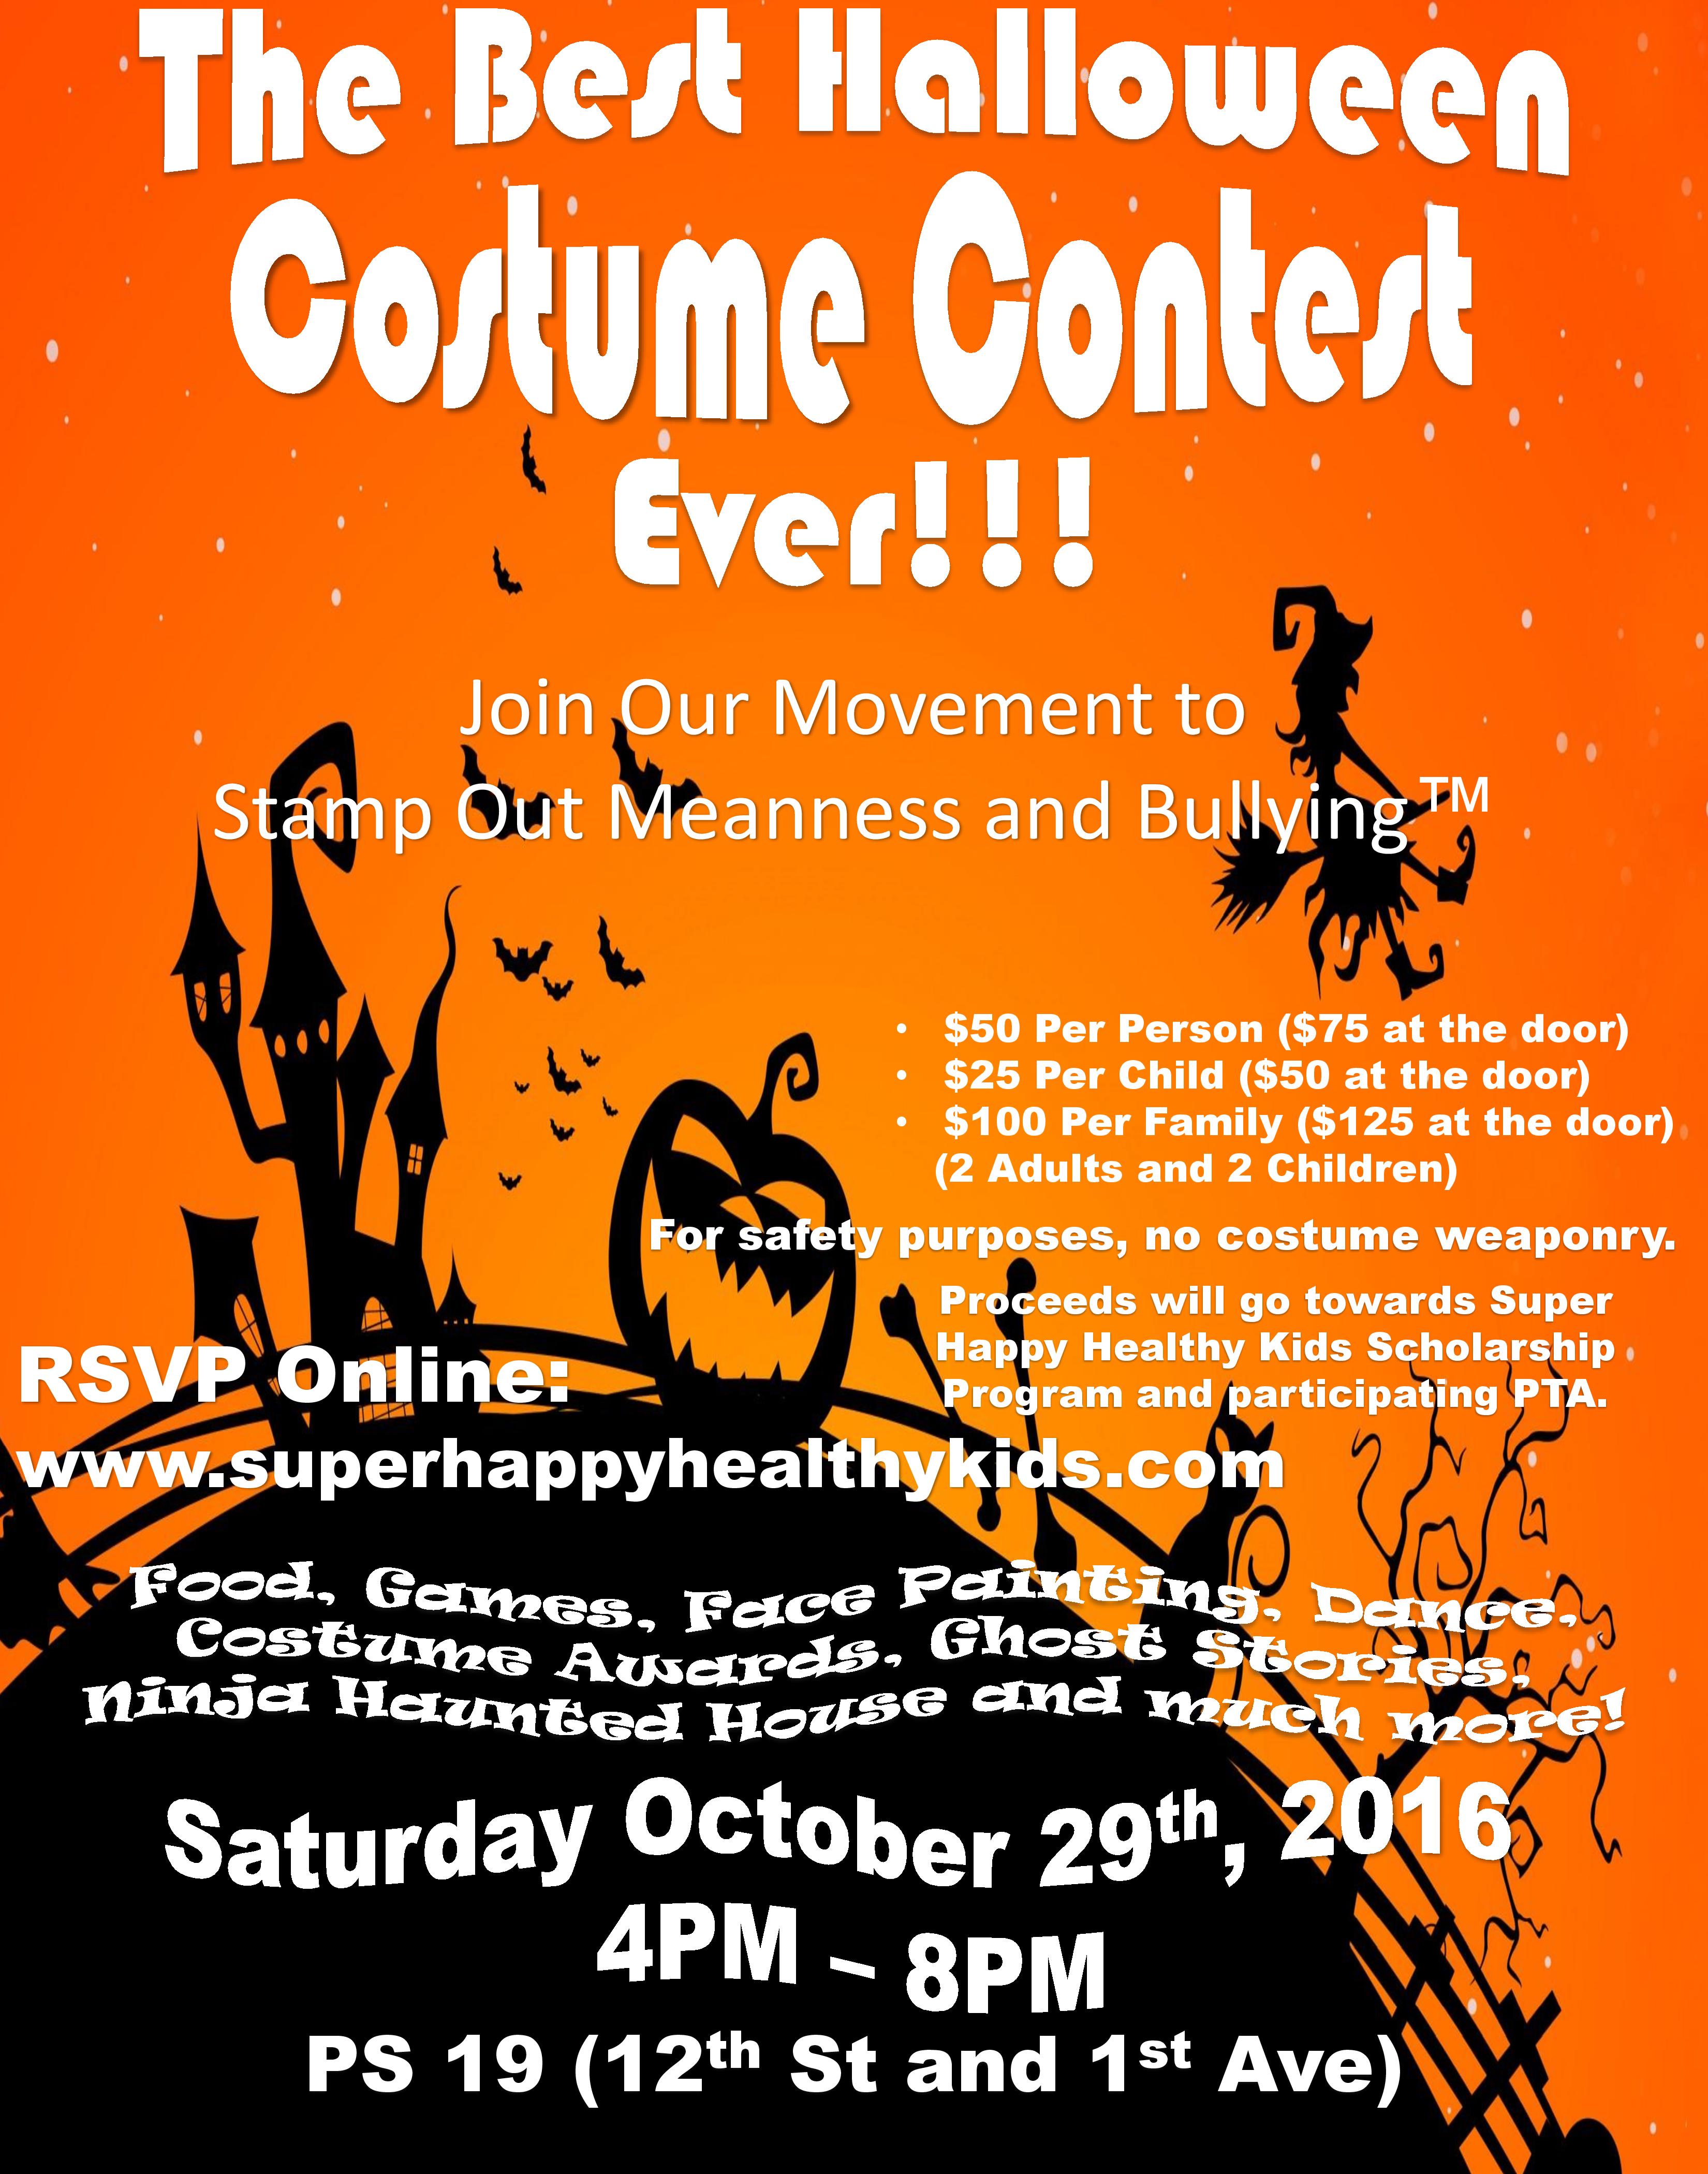 Saturday Halloween Costume Contest 16